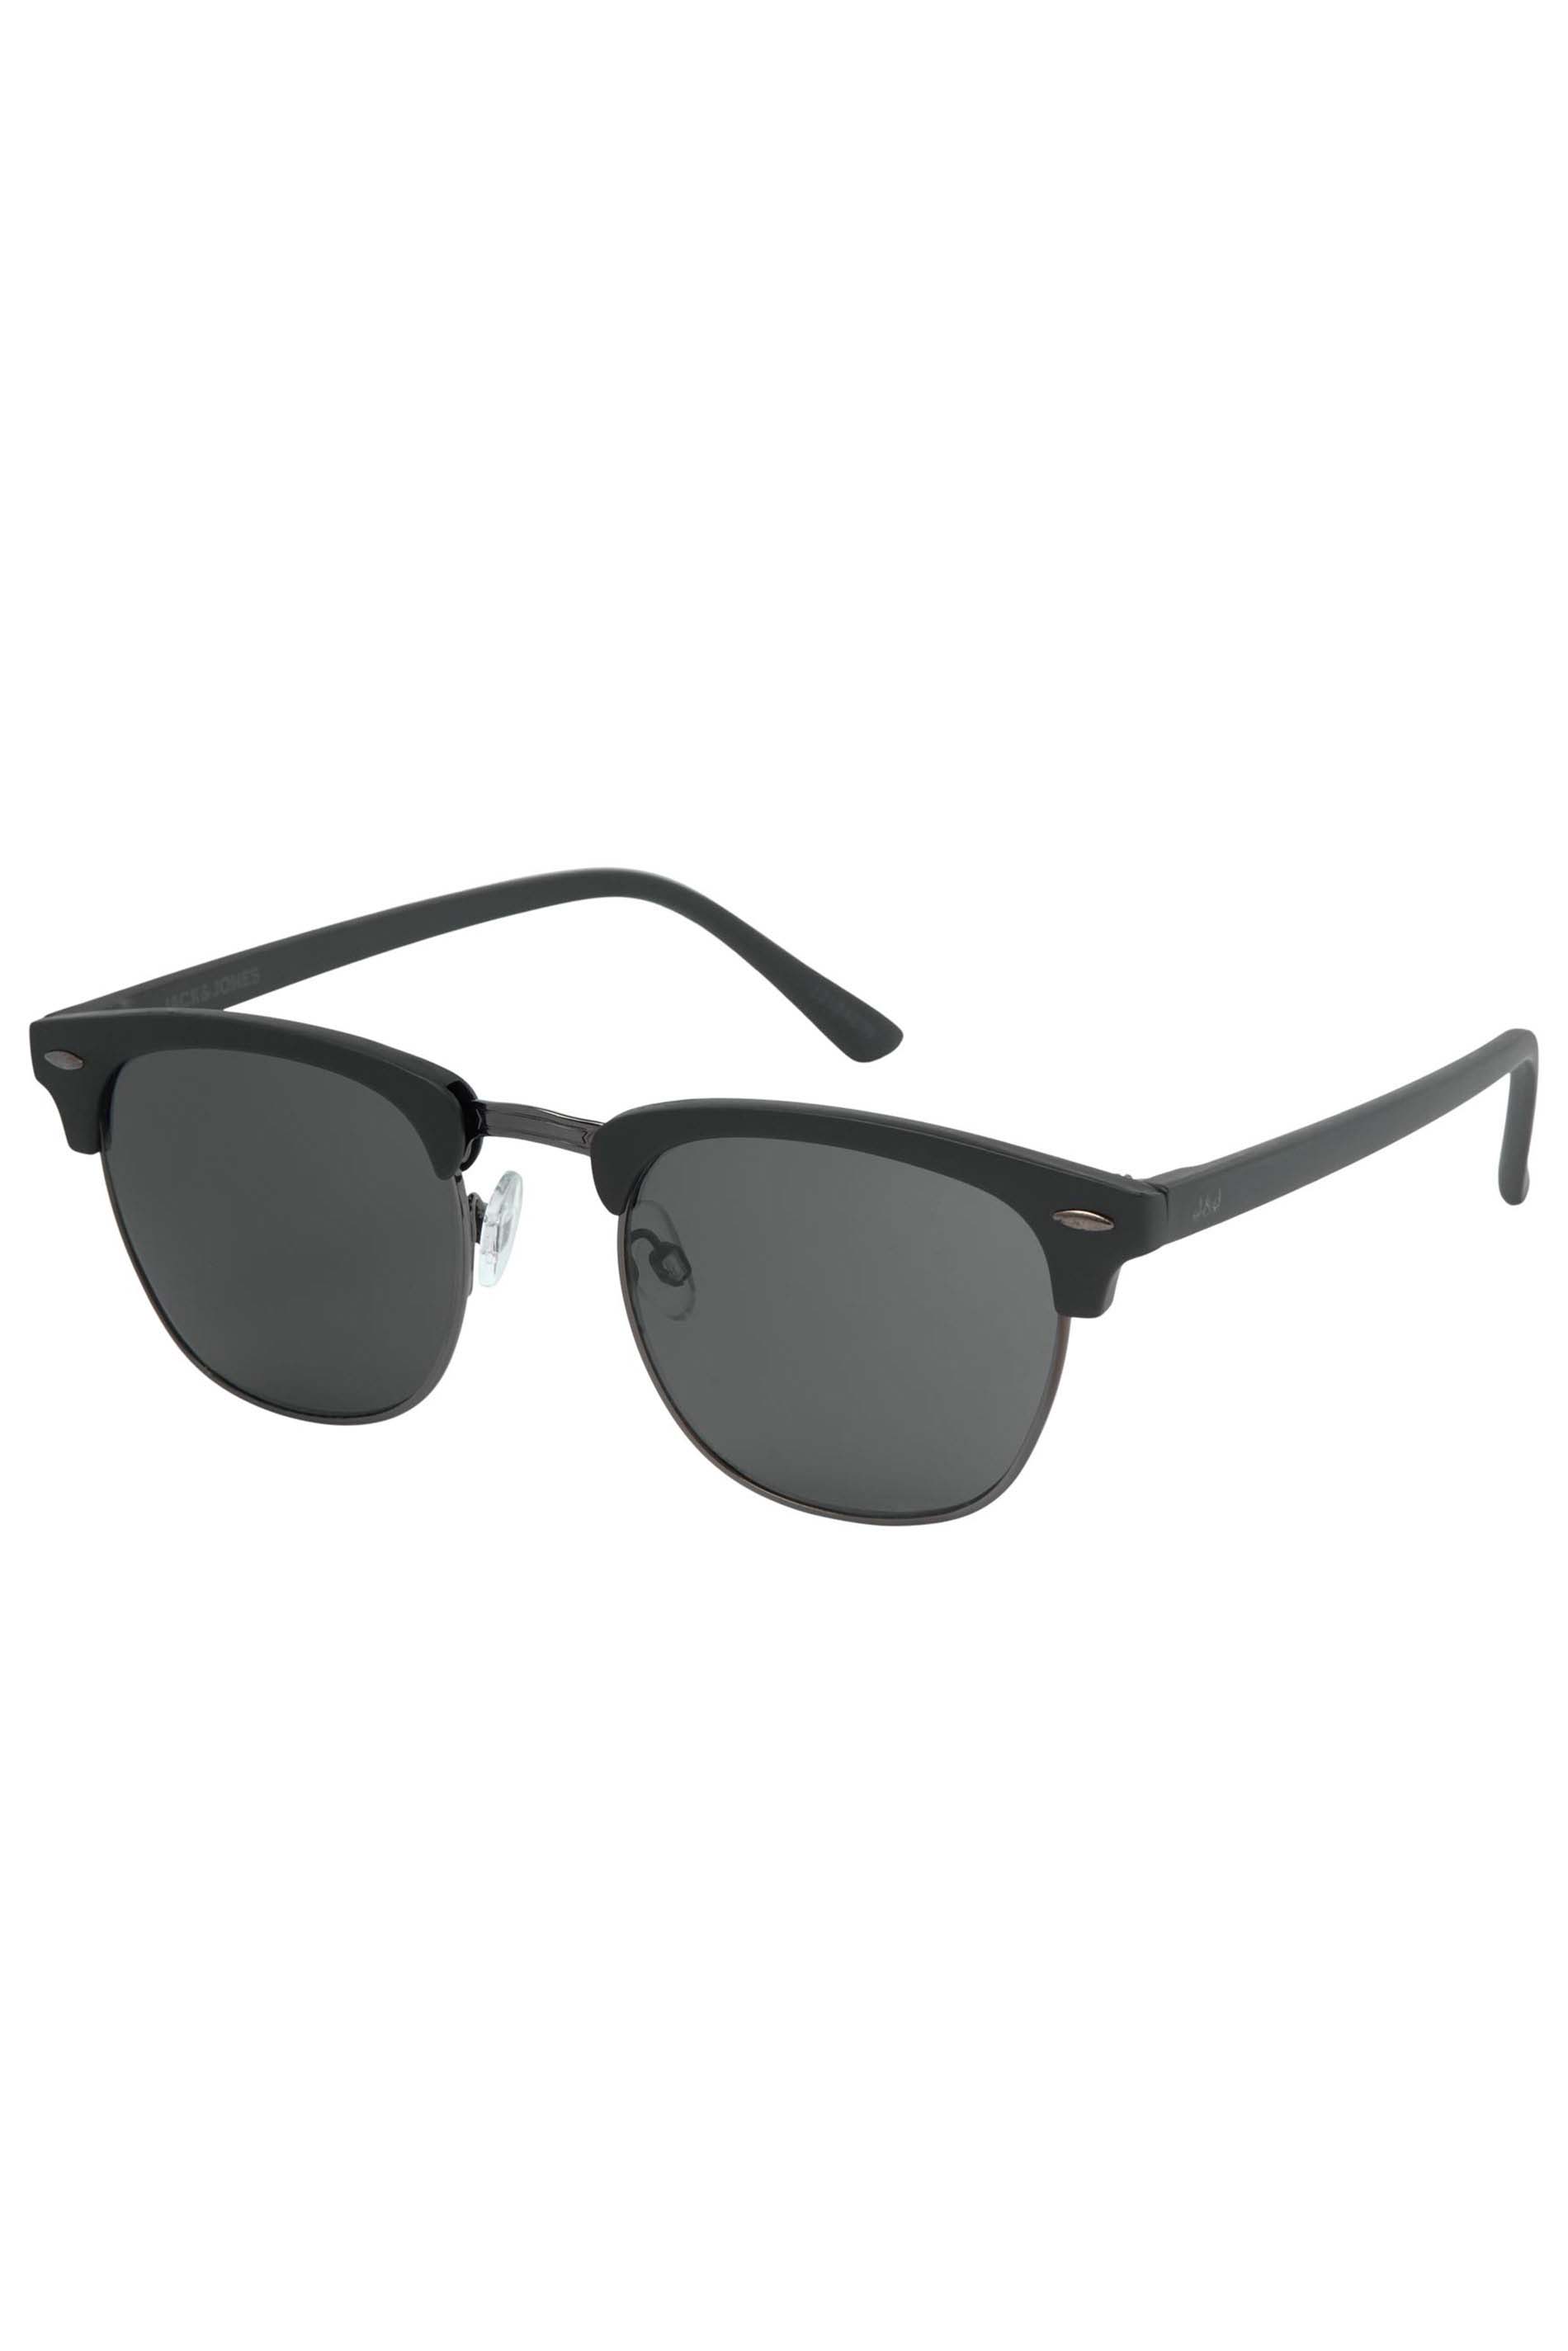 JACK & JONES Black Jet Clubmaster Sunglasses | BadRhino 1